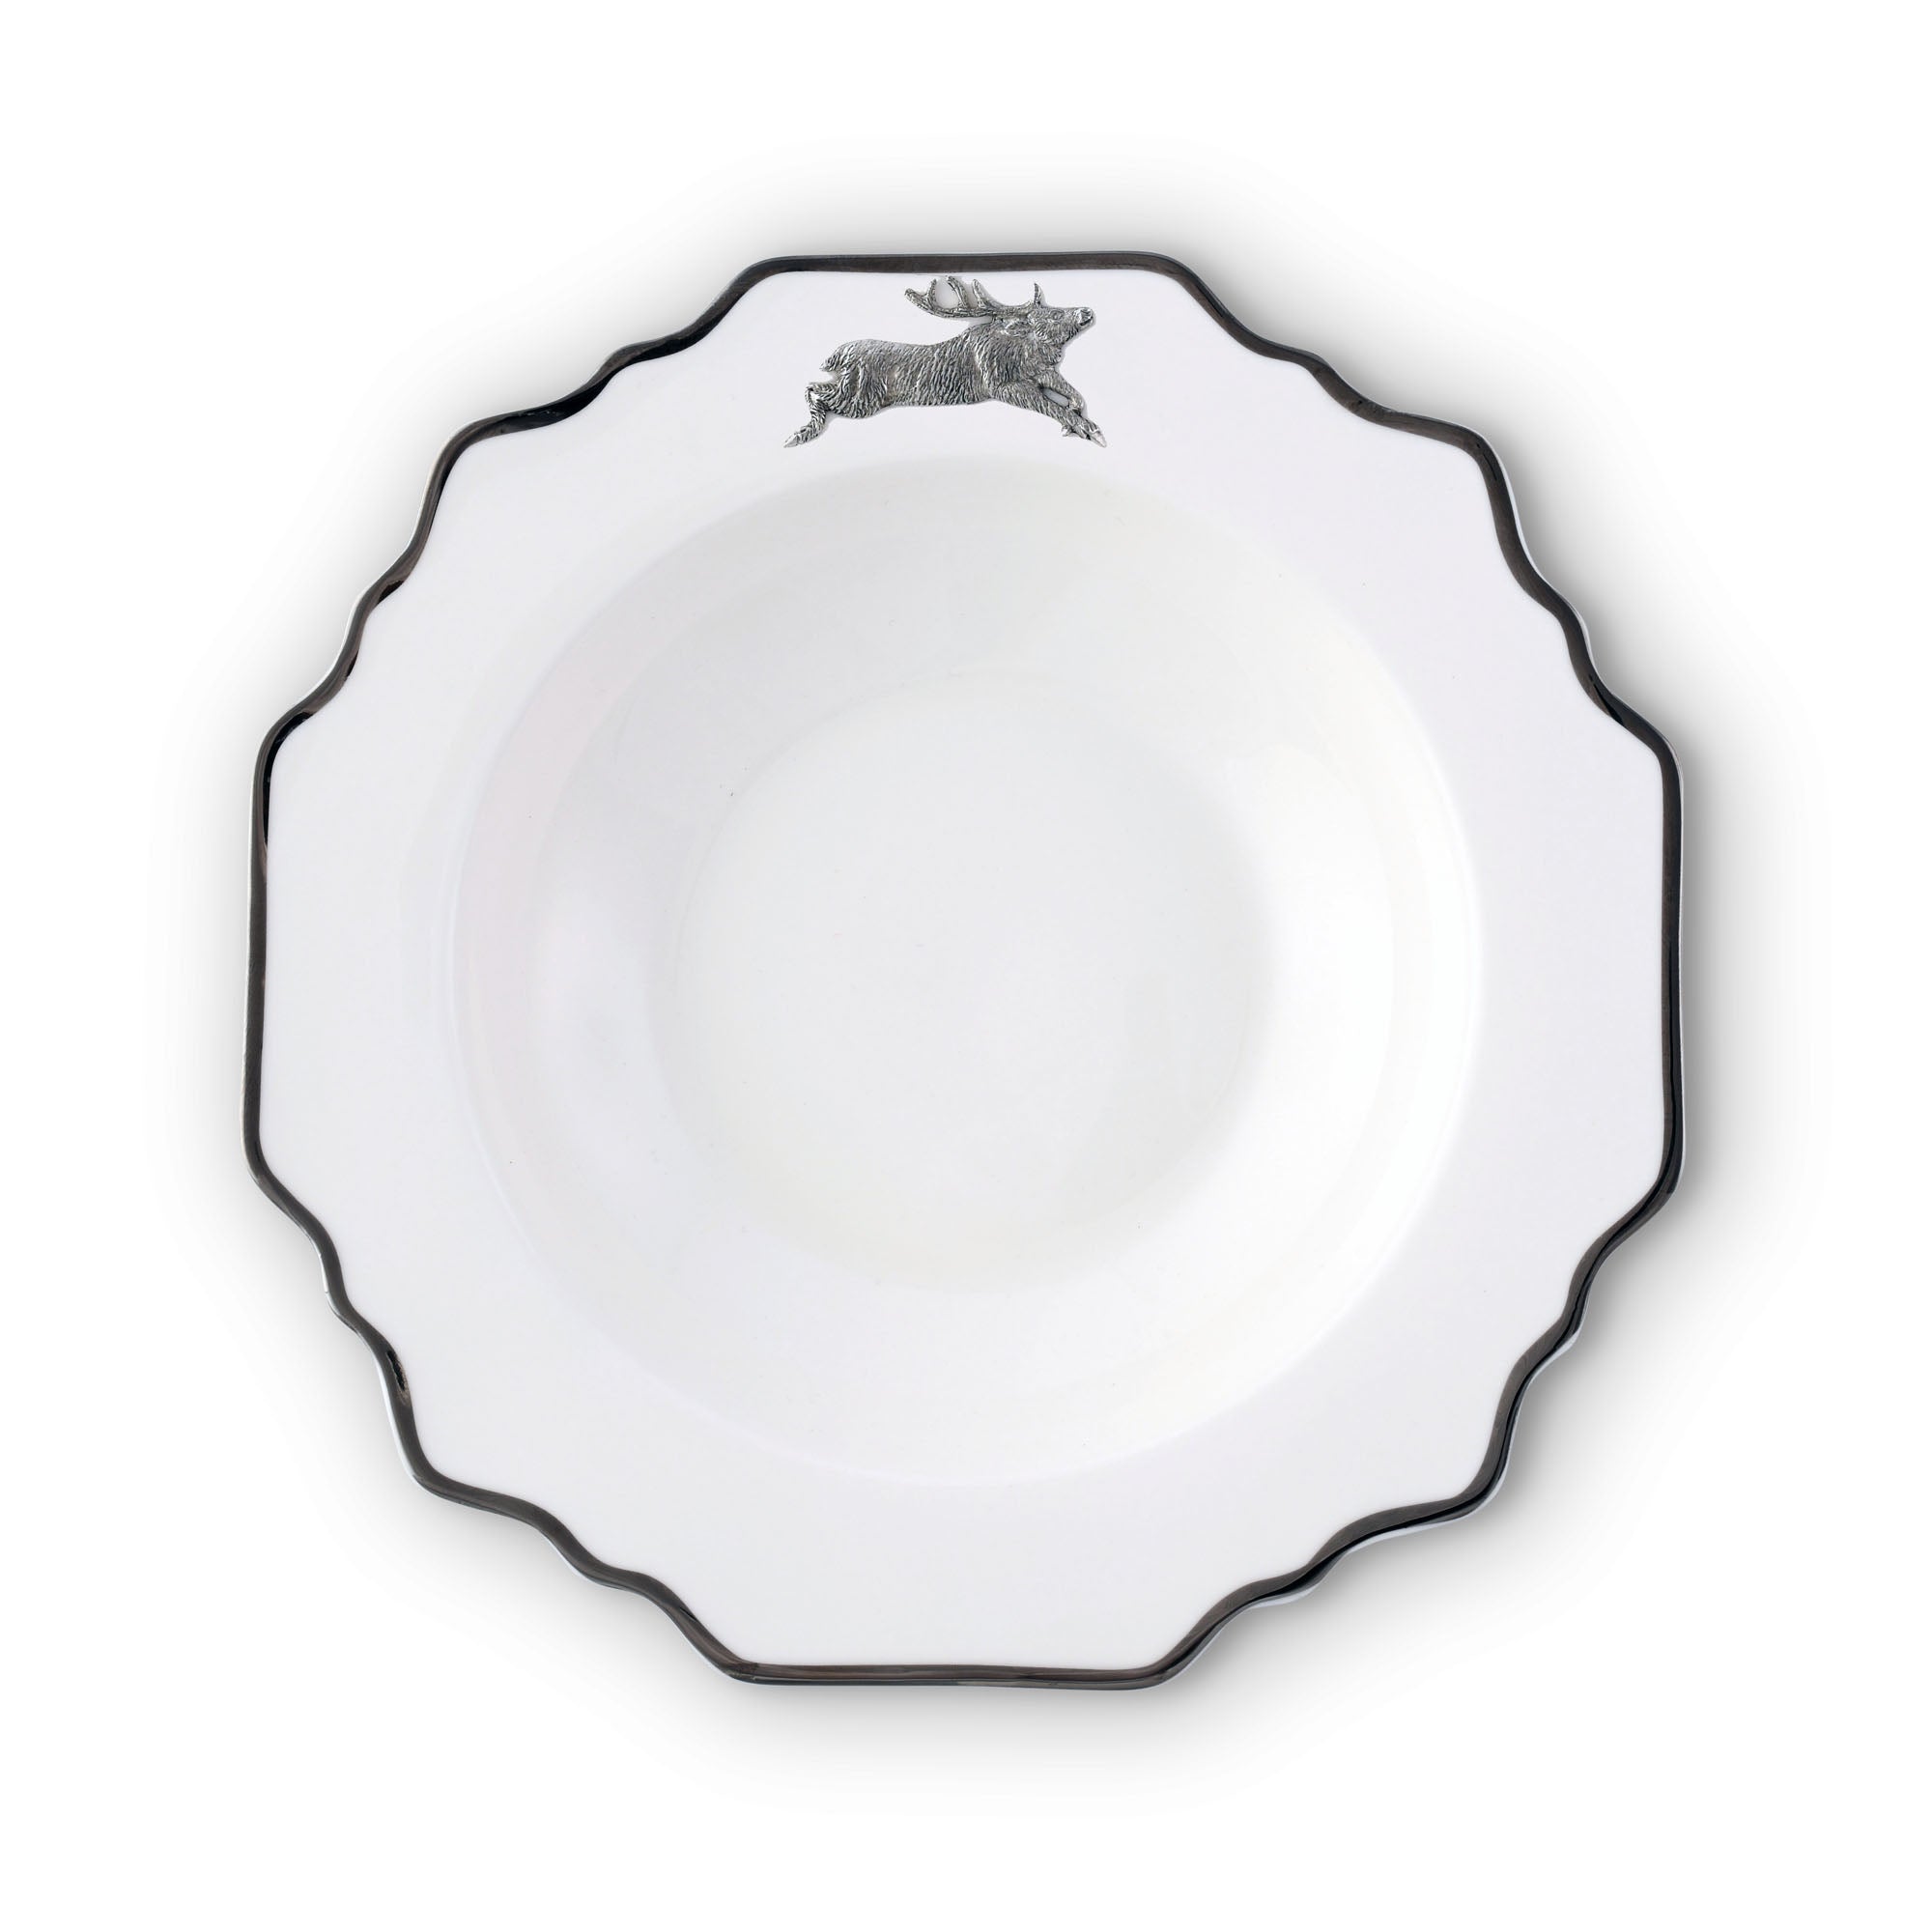 Vagabond House Running Elk Bone China Scallop Soup Plate Platinum Rim Product Image